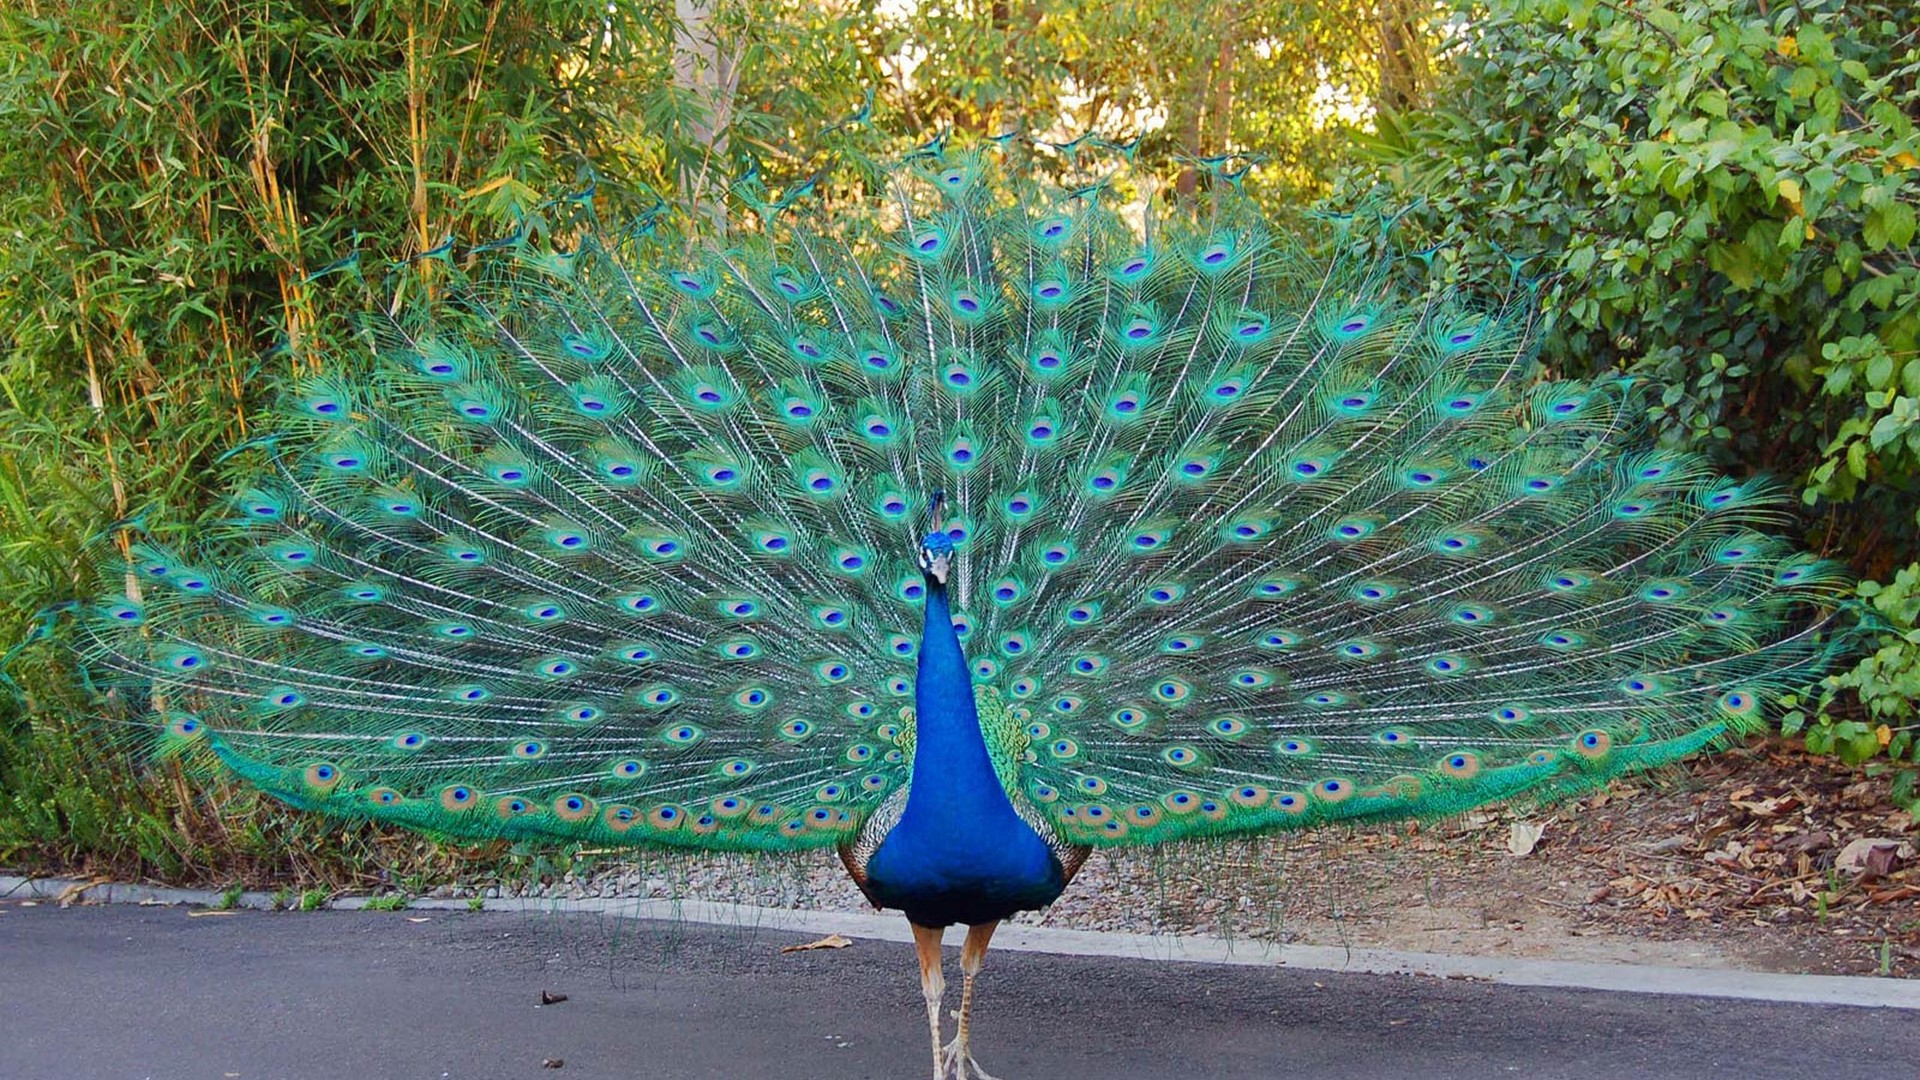 Beauty Peacock Wallpaper